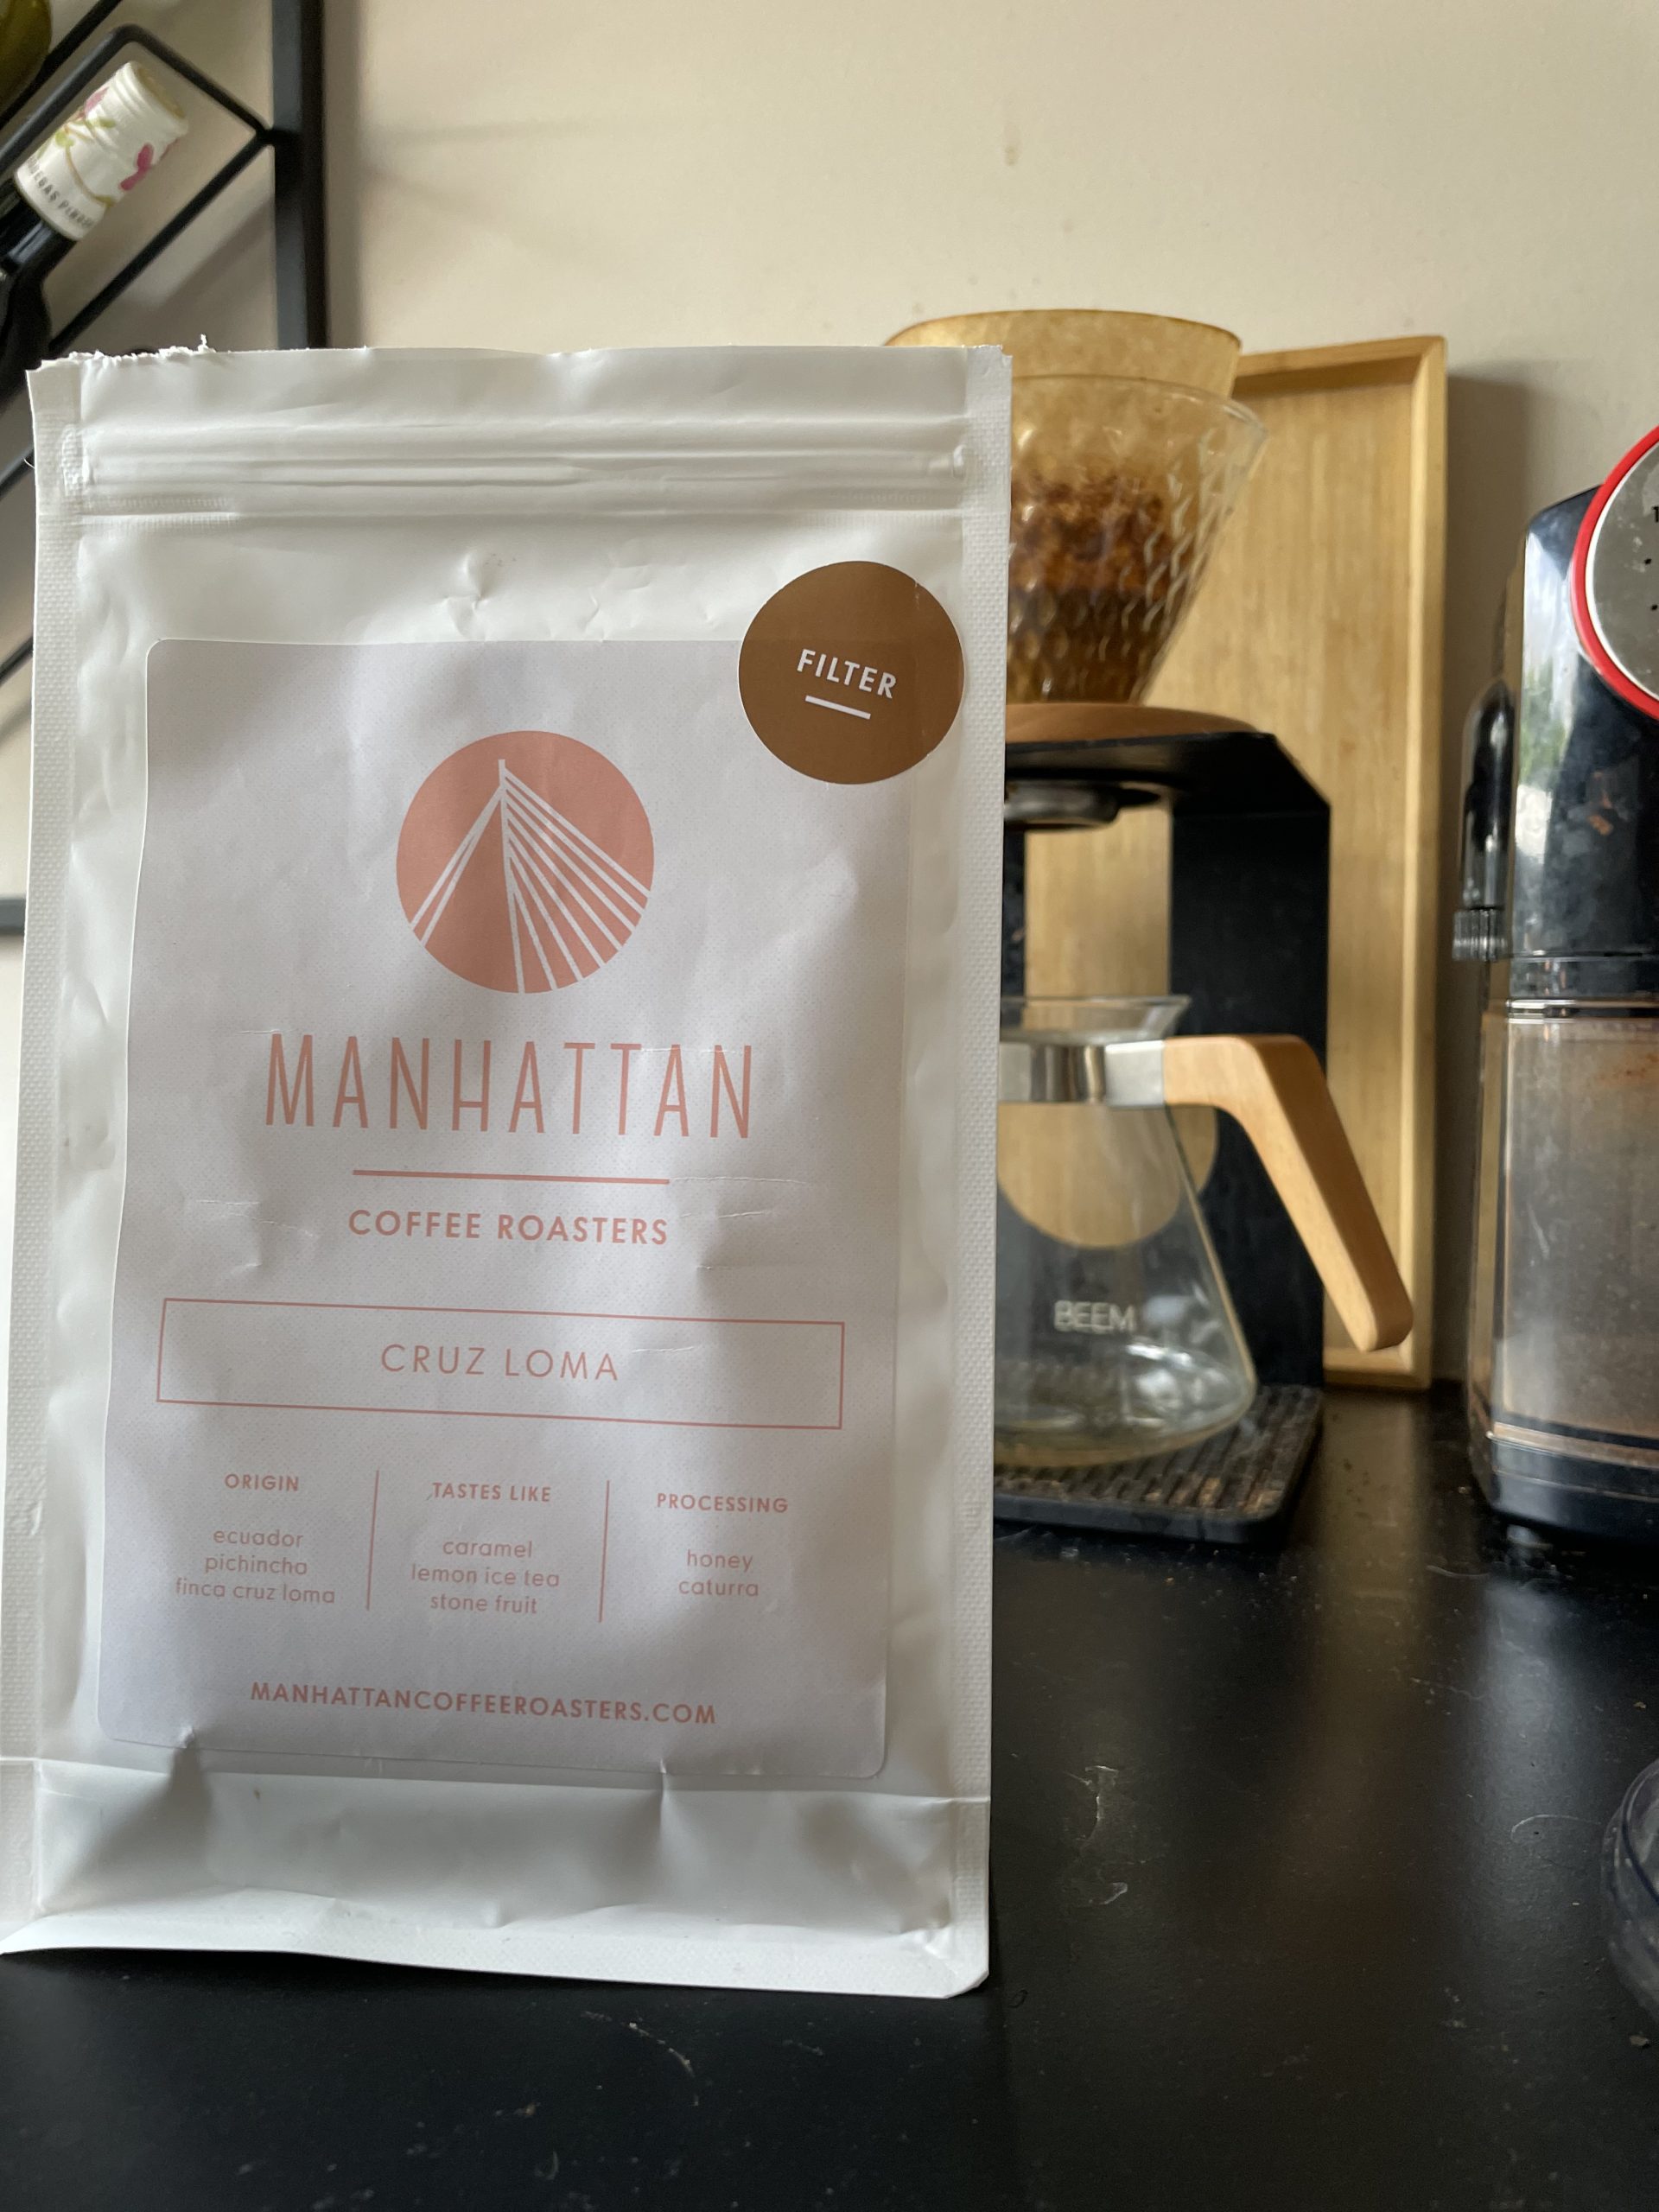 Cruz Loma – Ecuador – Filter by Manhattan Coffee Roasters